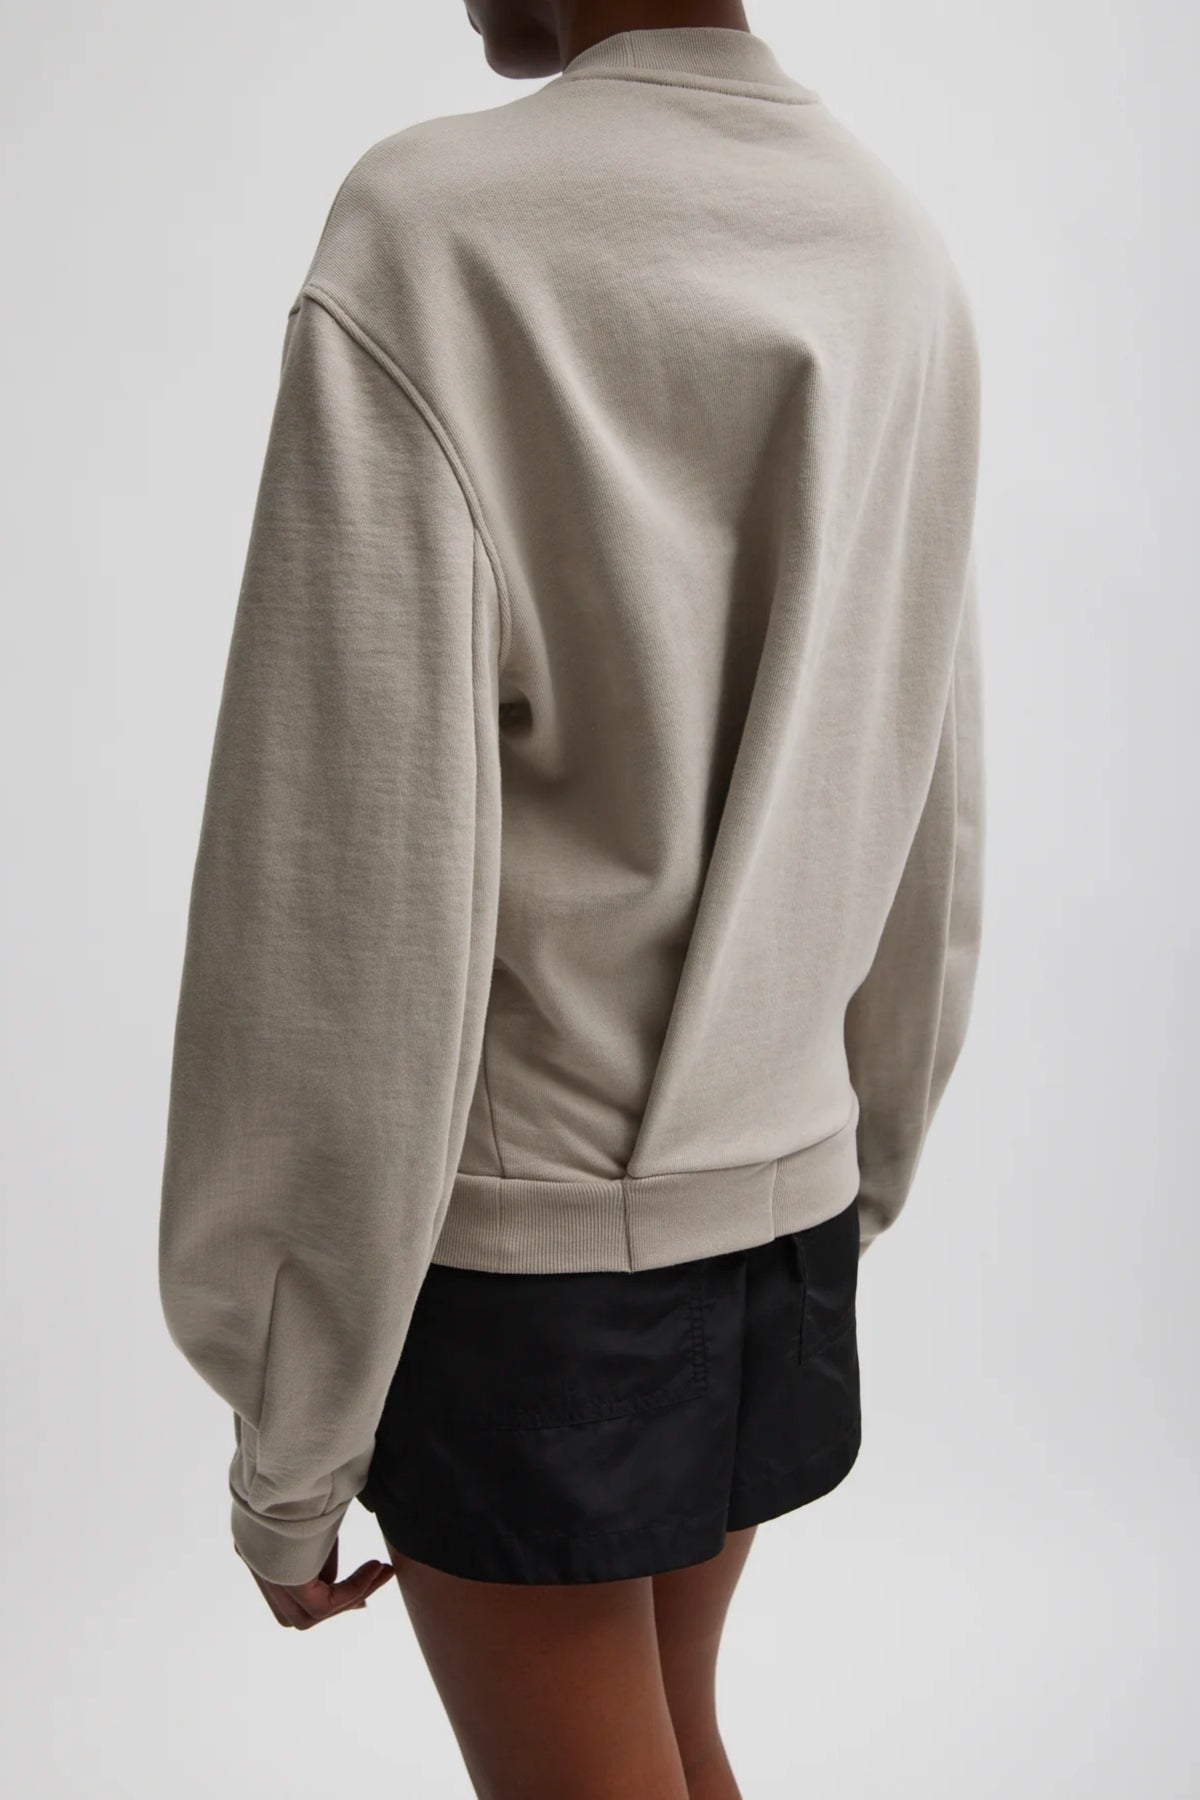 Tibi Sculpted Sleeve Short Sweatshirt - Light Stone